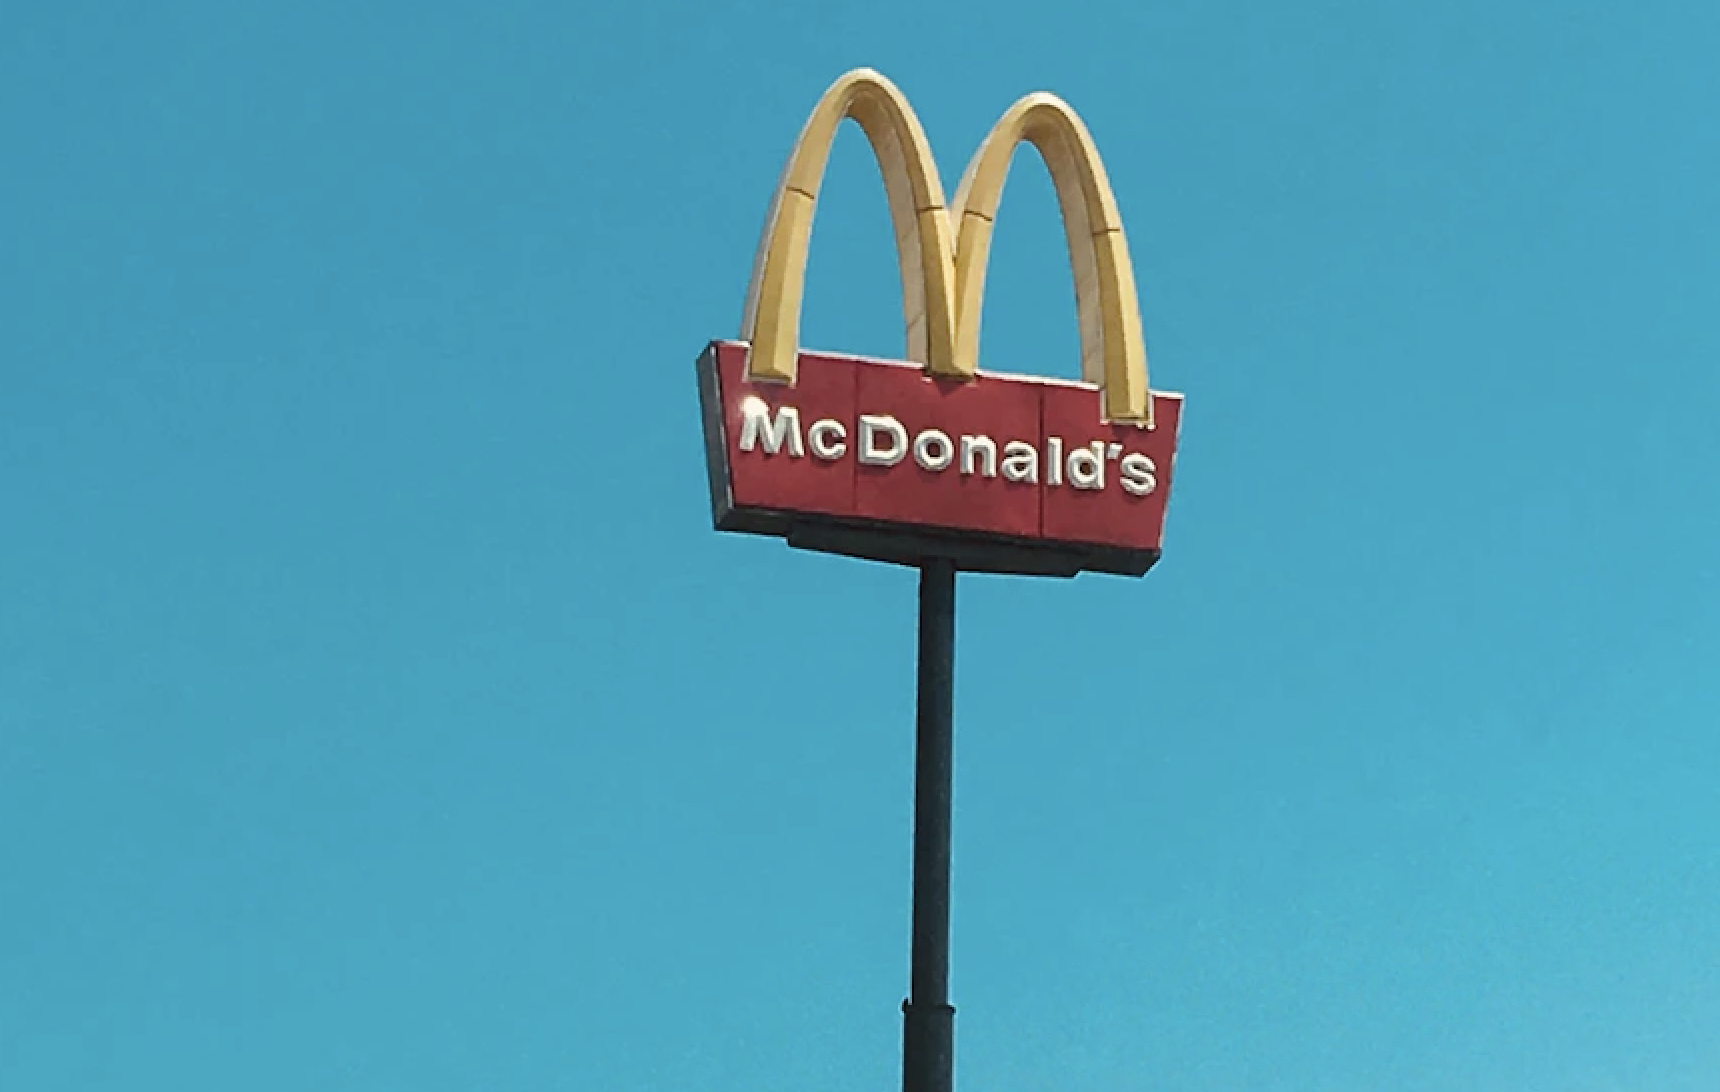 McDonald's arches sign